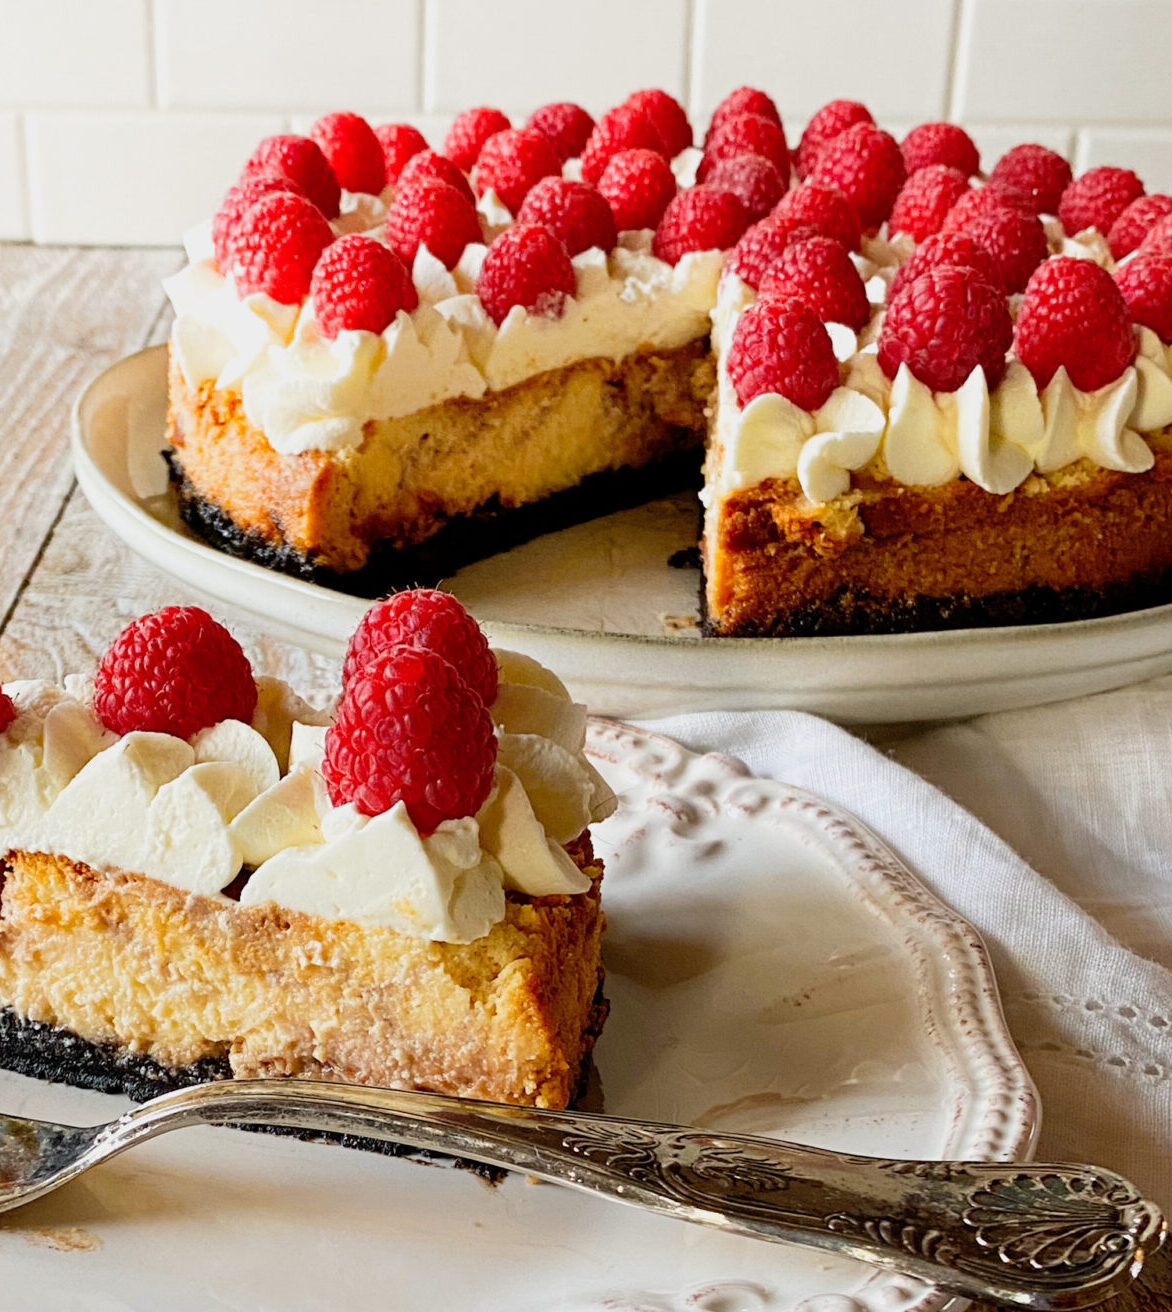 Raspberry Swirl Cheesecake with Chocolate Crust - The Perks of Being Us